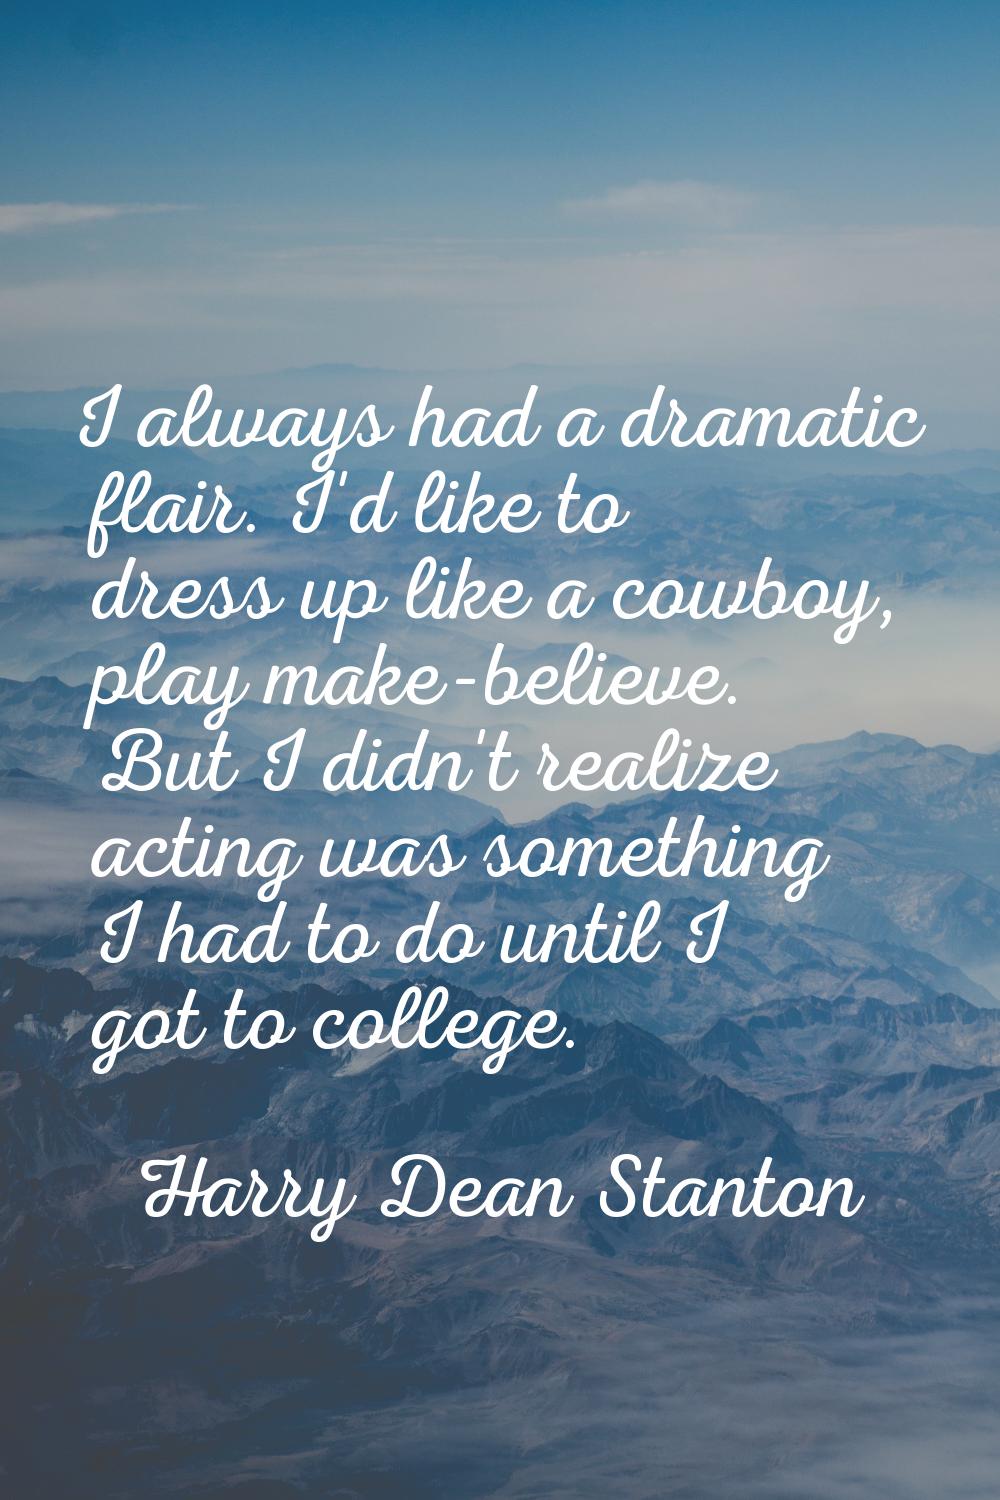 I always had a dramatic flair. I'd like to dress up like a cowboy, play make-believe. But I didn't 